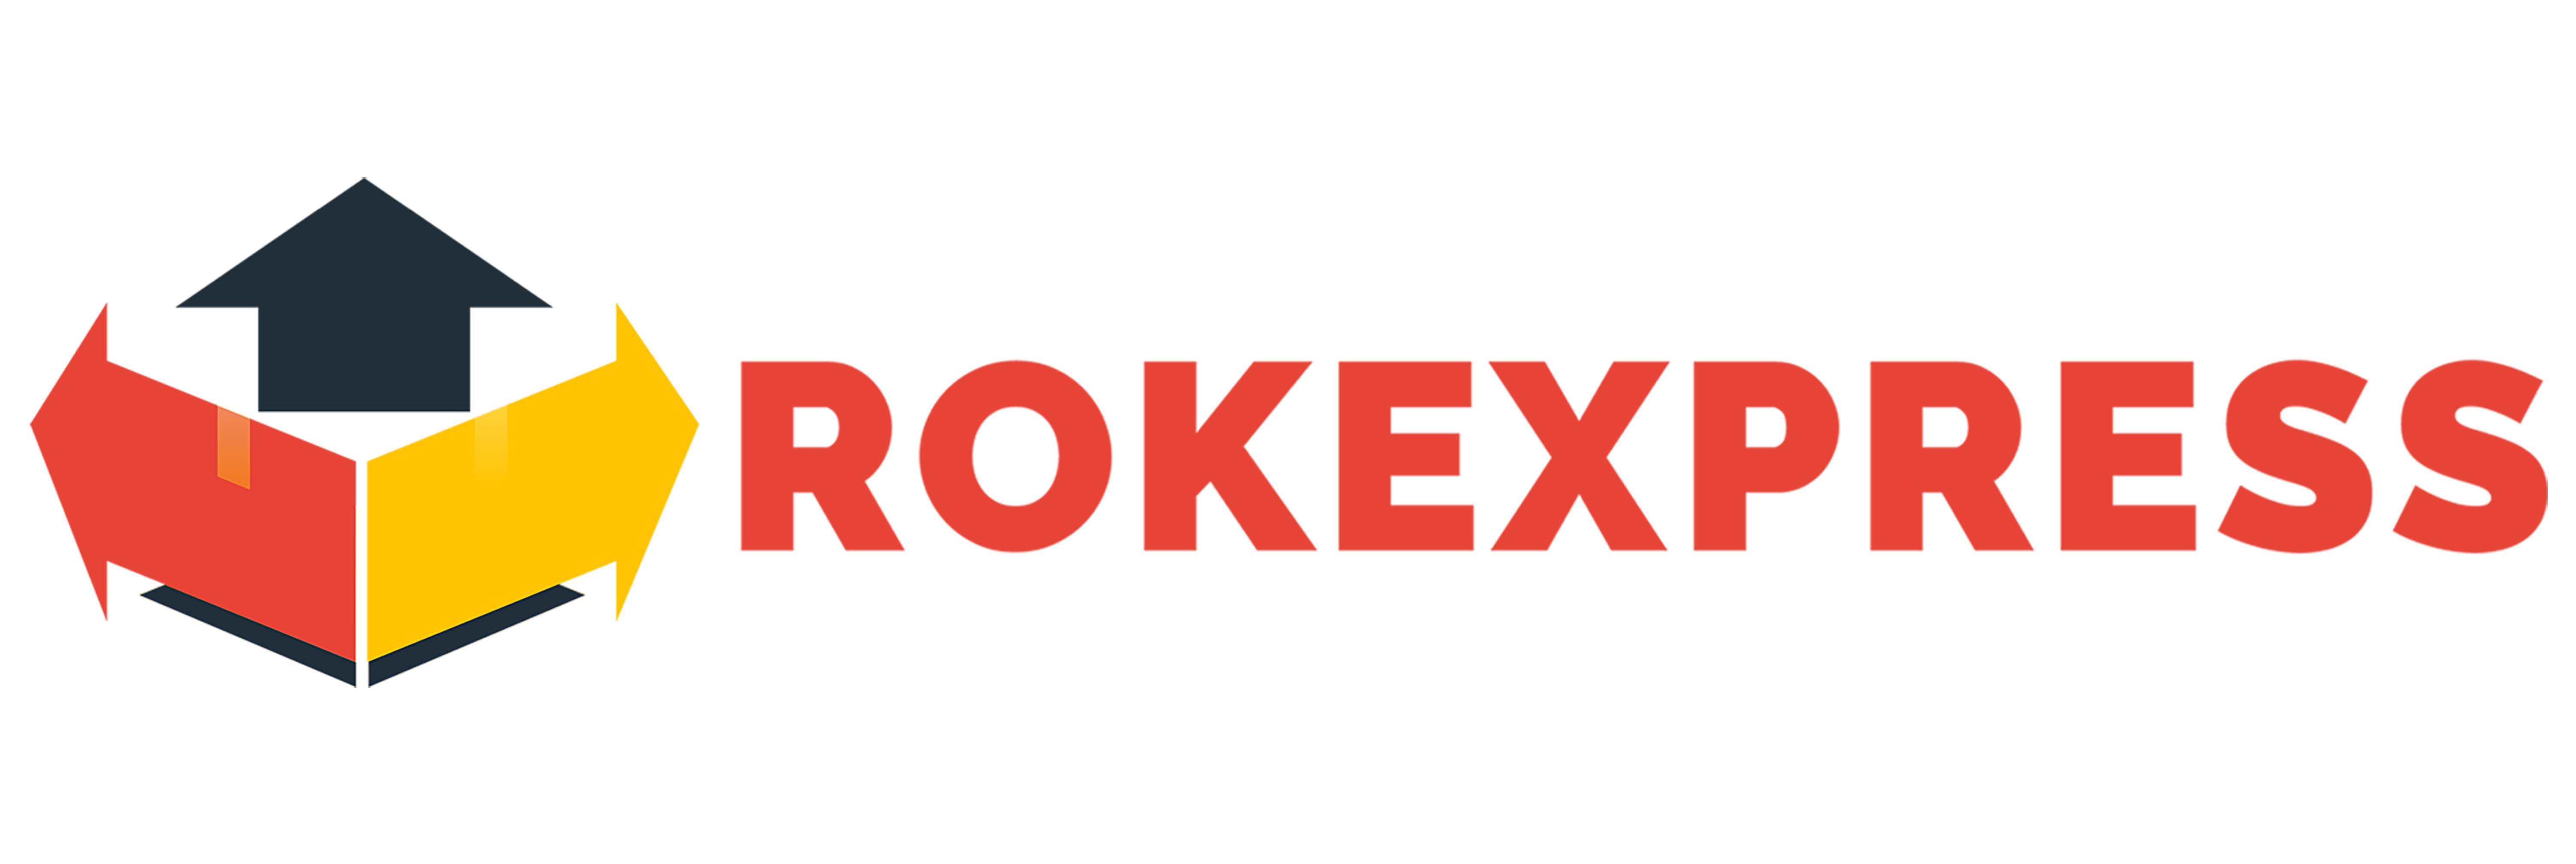 RokExpress-Logo-transparent.png